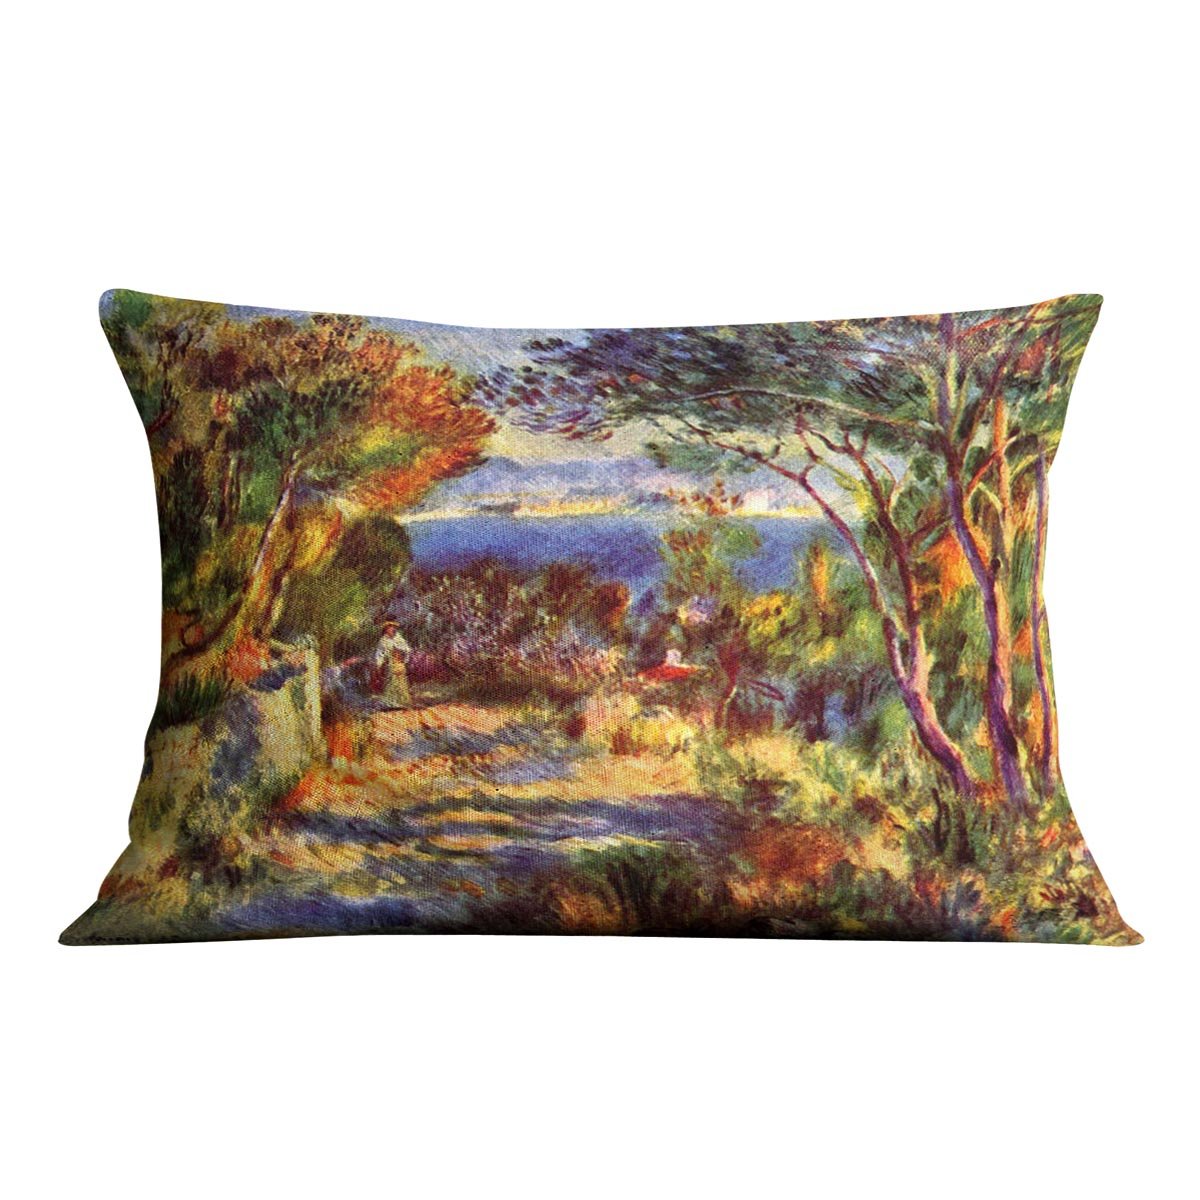 Le Staque by Renoir Throw Pillow